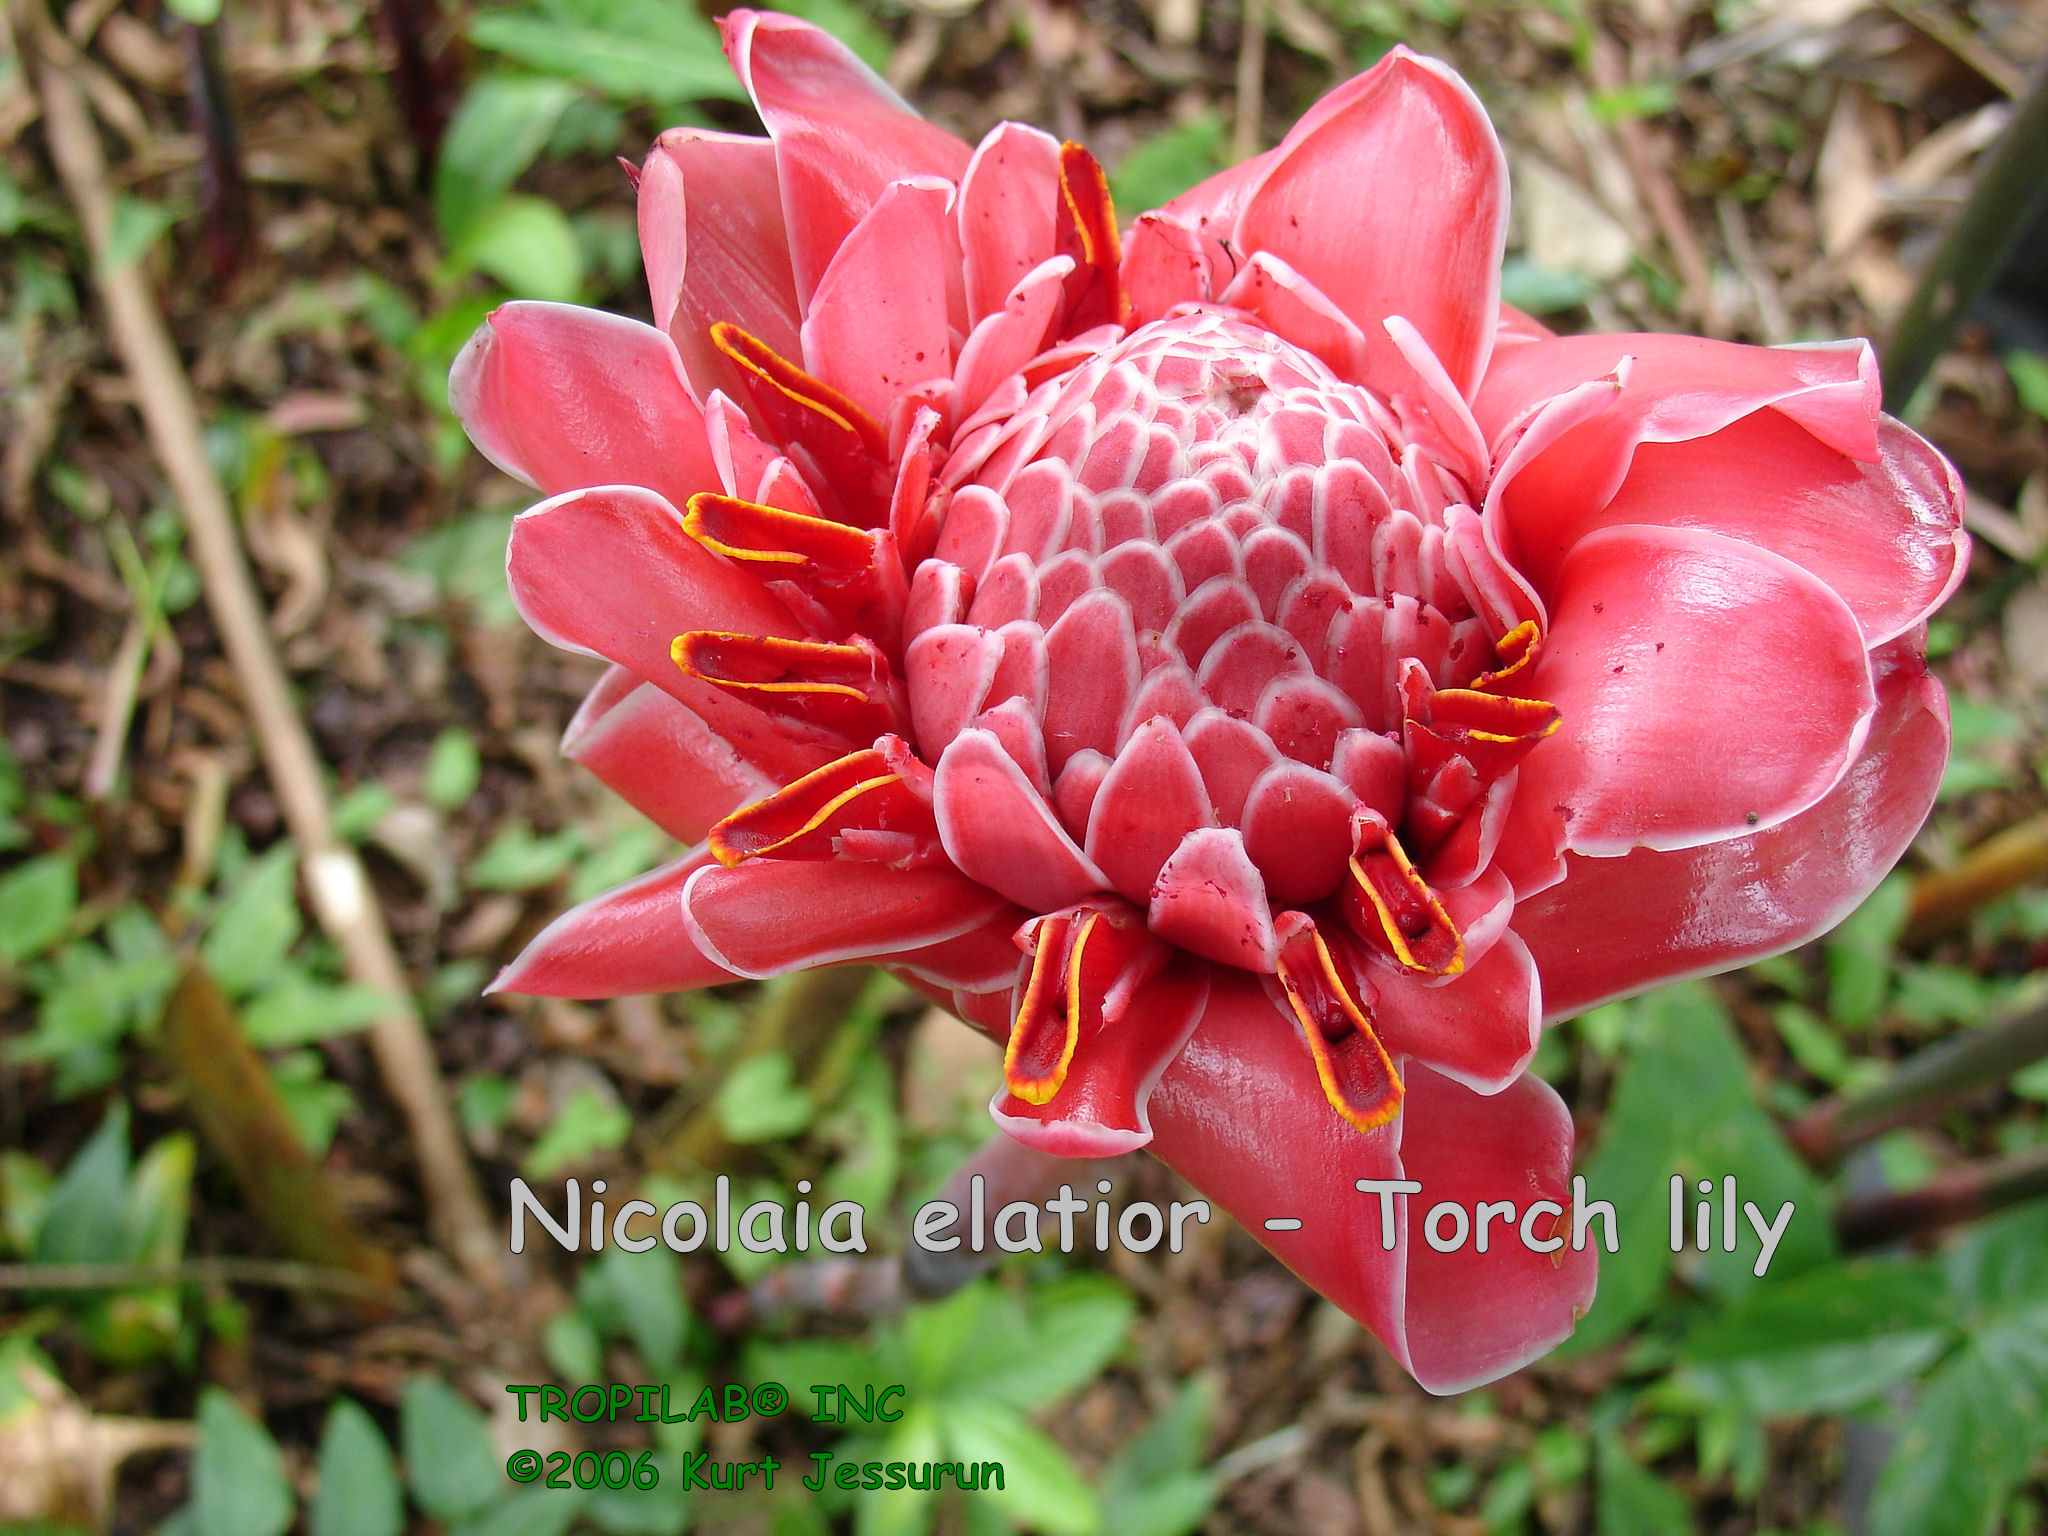 Nicolaia elatior - Torch lily full bloom